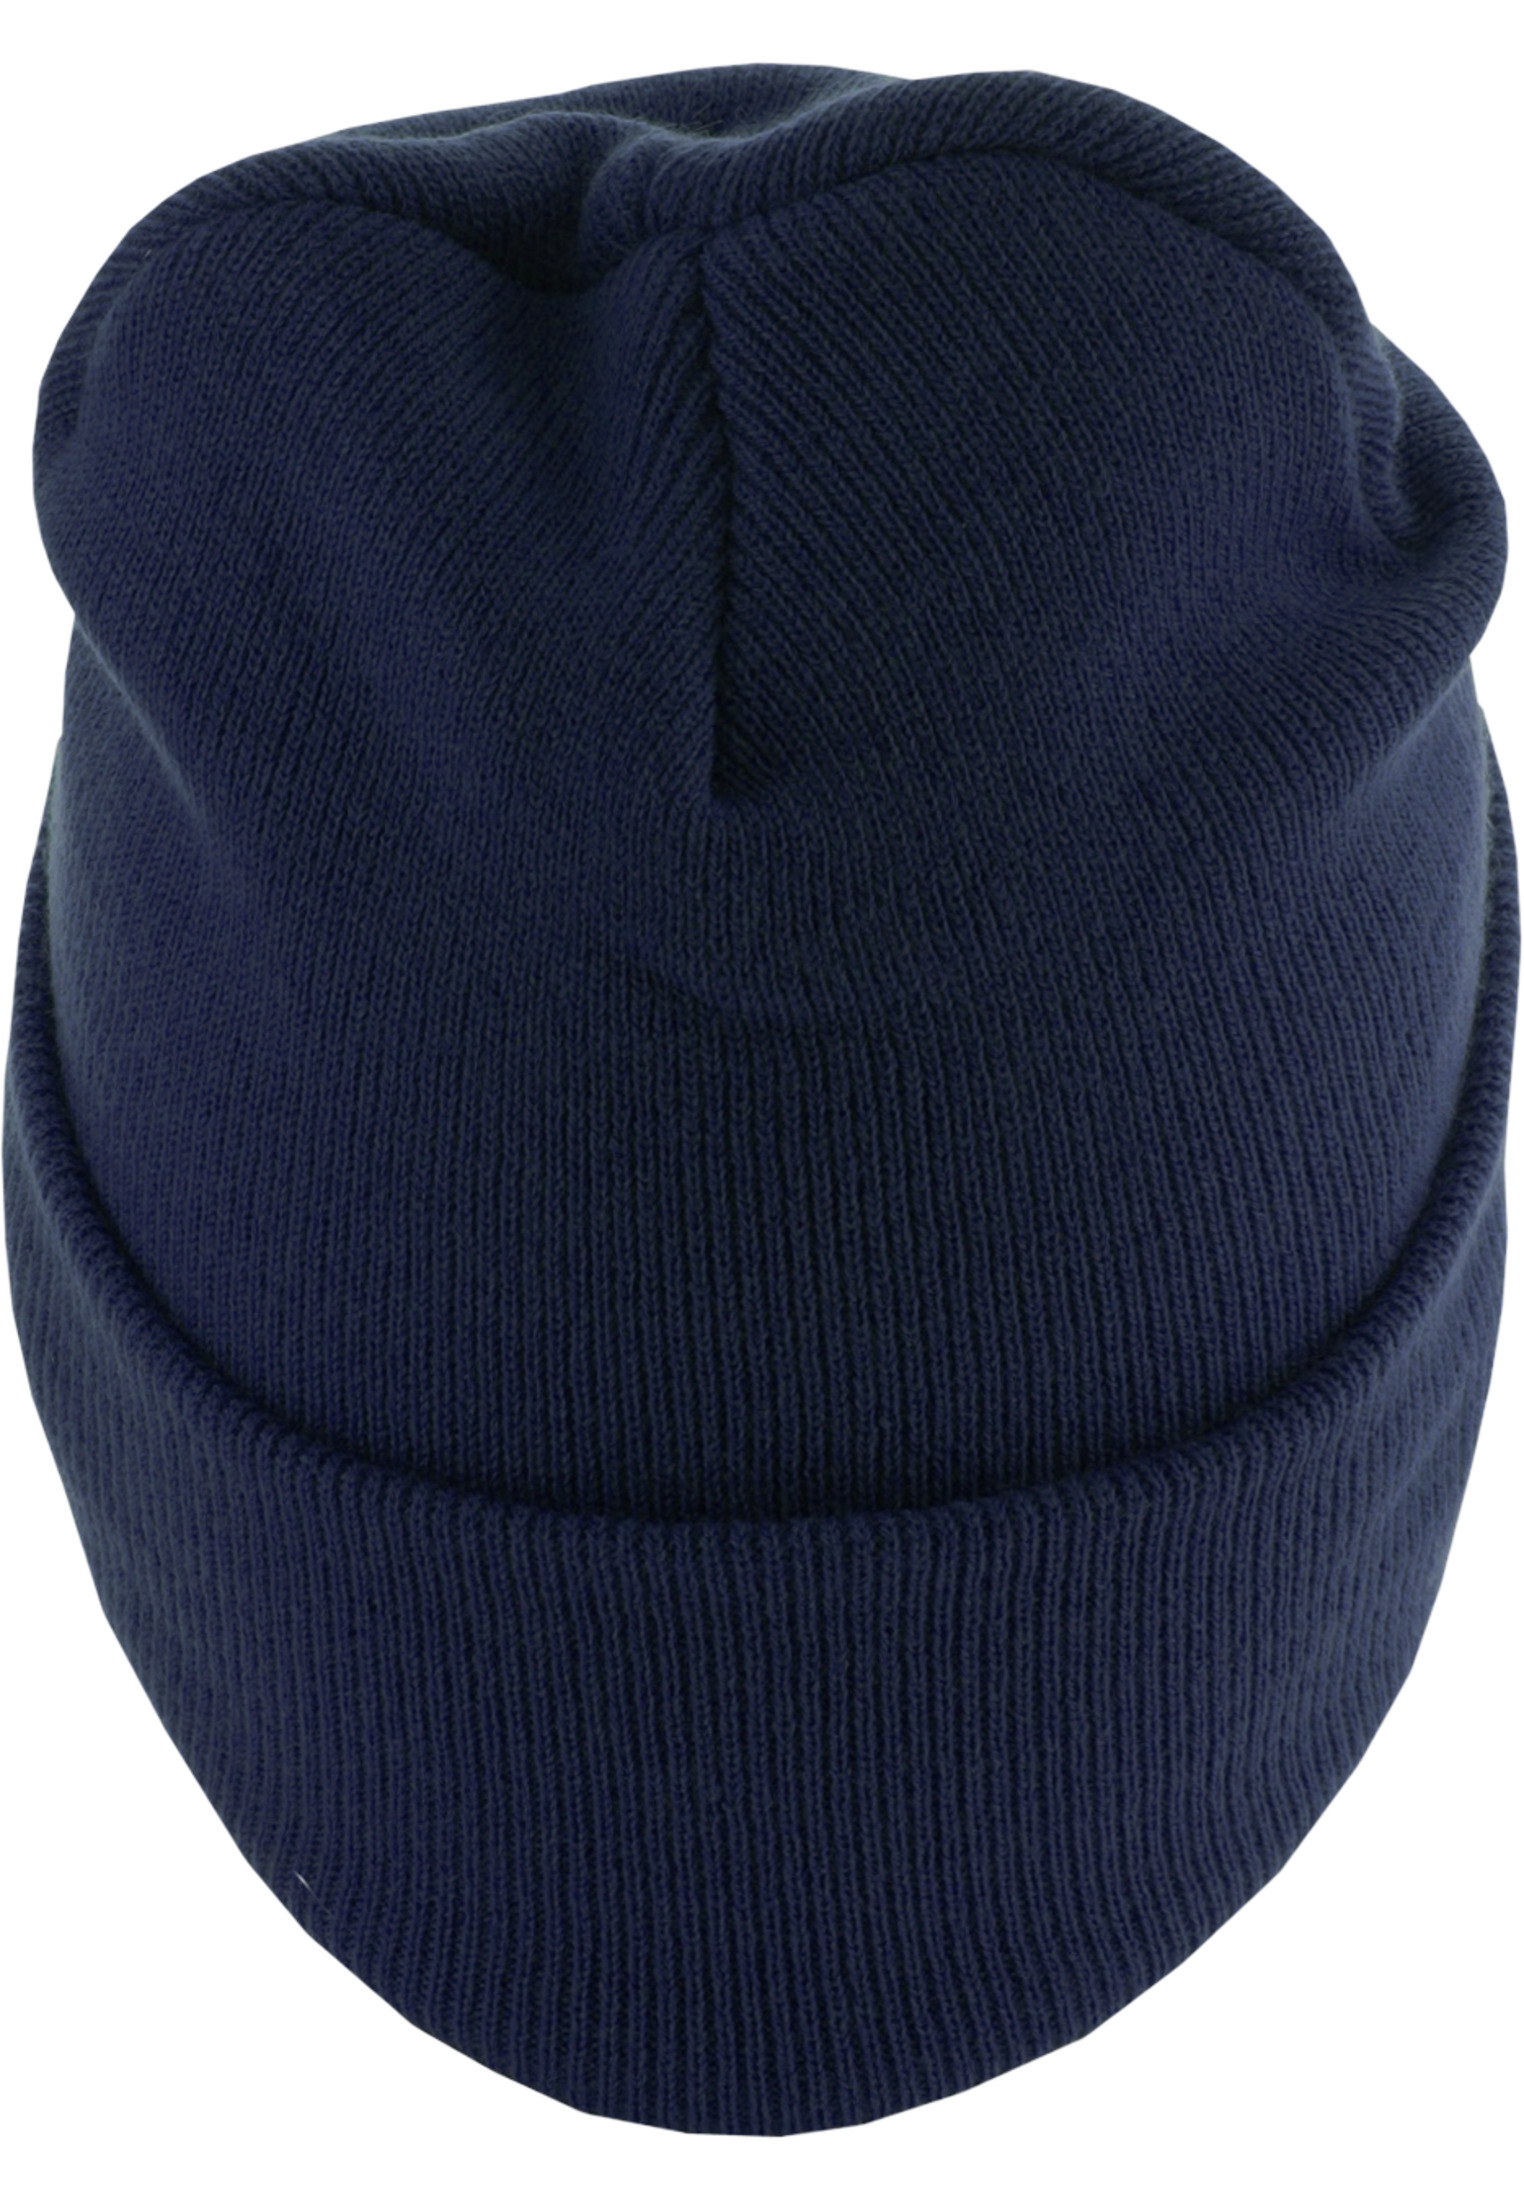 Caps & Beanies Beanie Basic Flap Long Version in Farbe navy